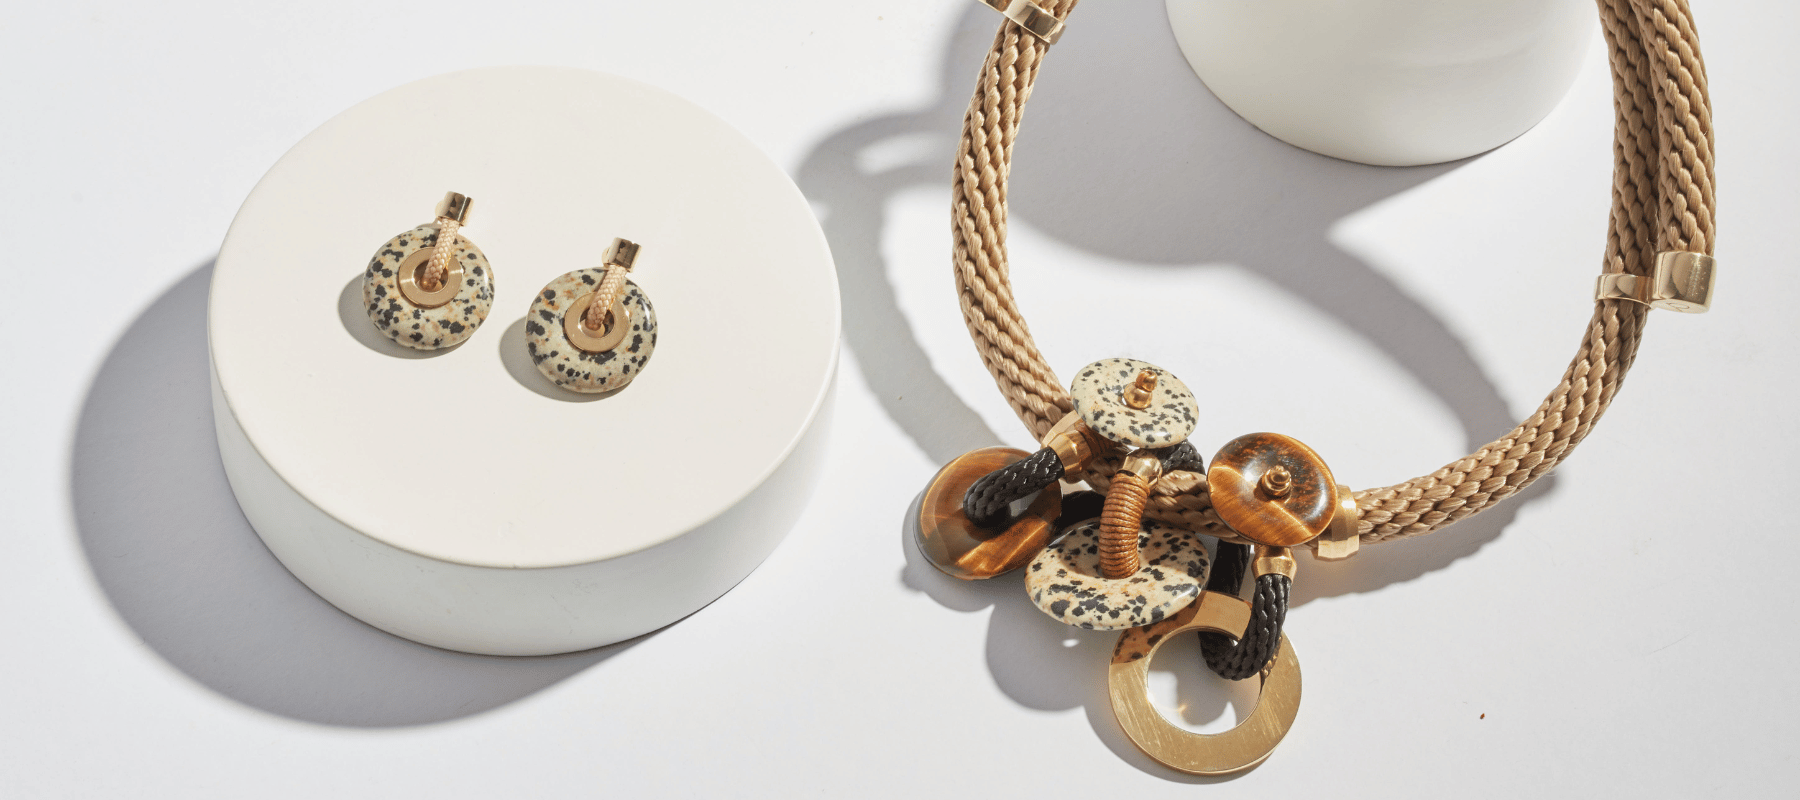 PICHULIK | Jewellery under $300